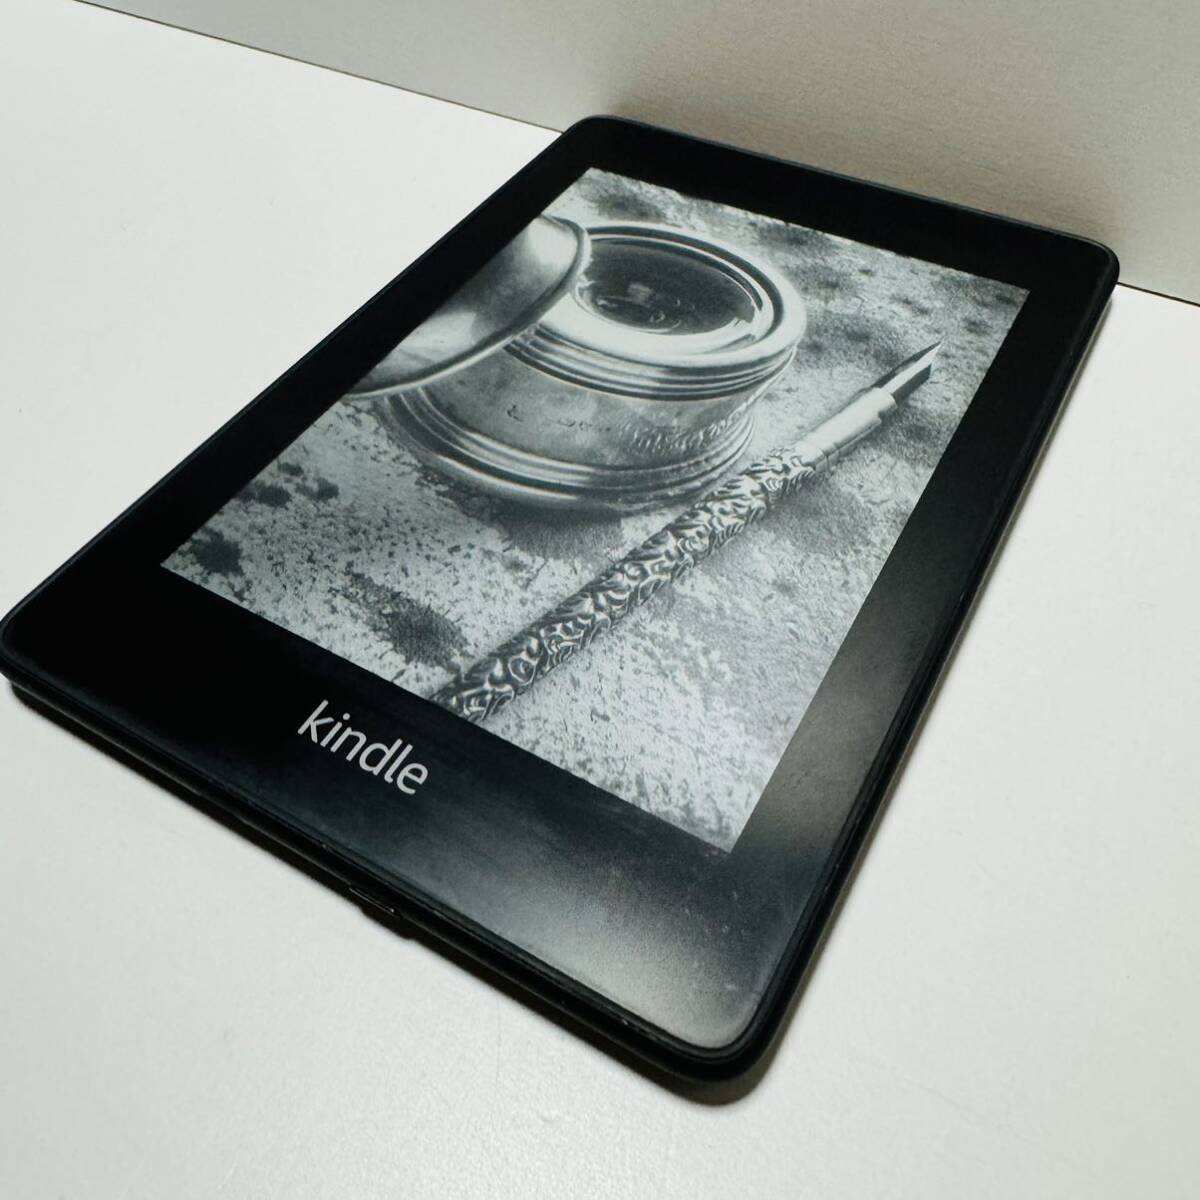 [ no. 10 generation ] Kindle Paperwhite waterproof 8GB